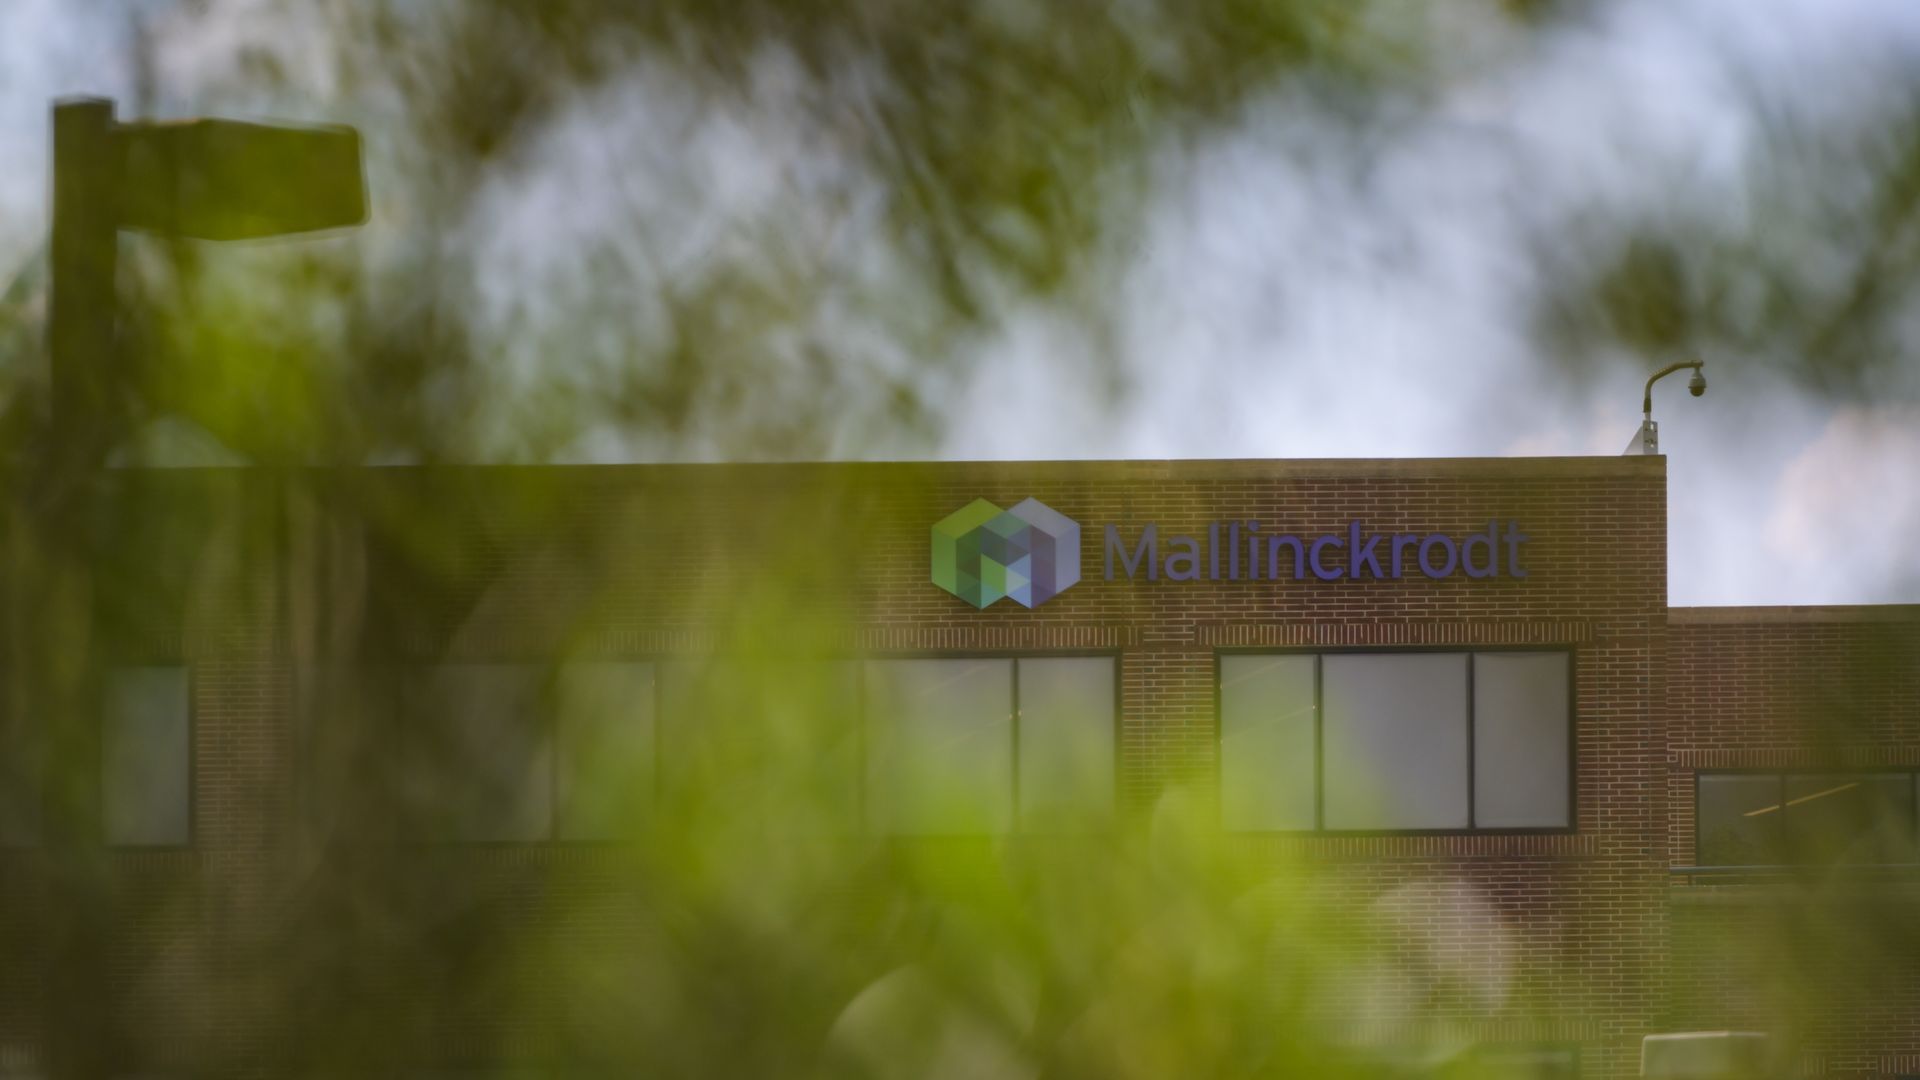 Mallinckrodt office building behind trees.